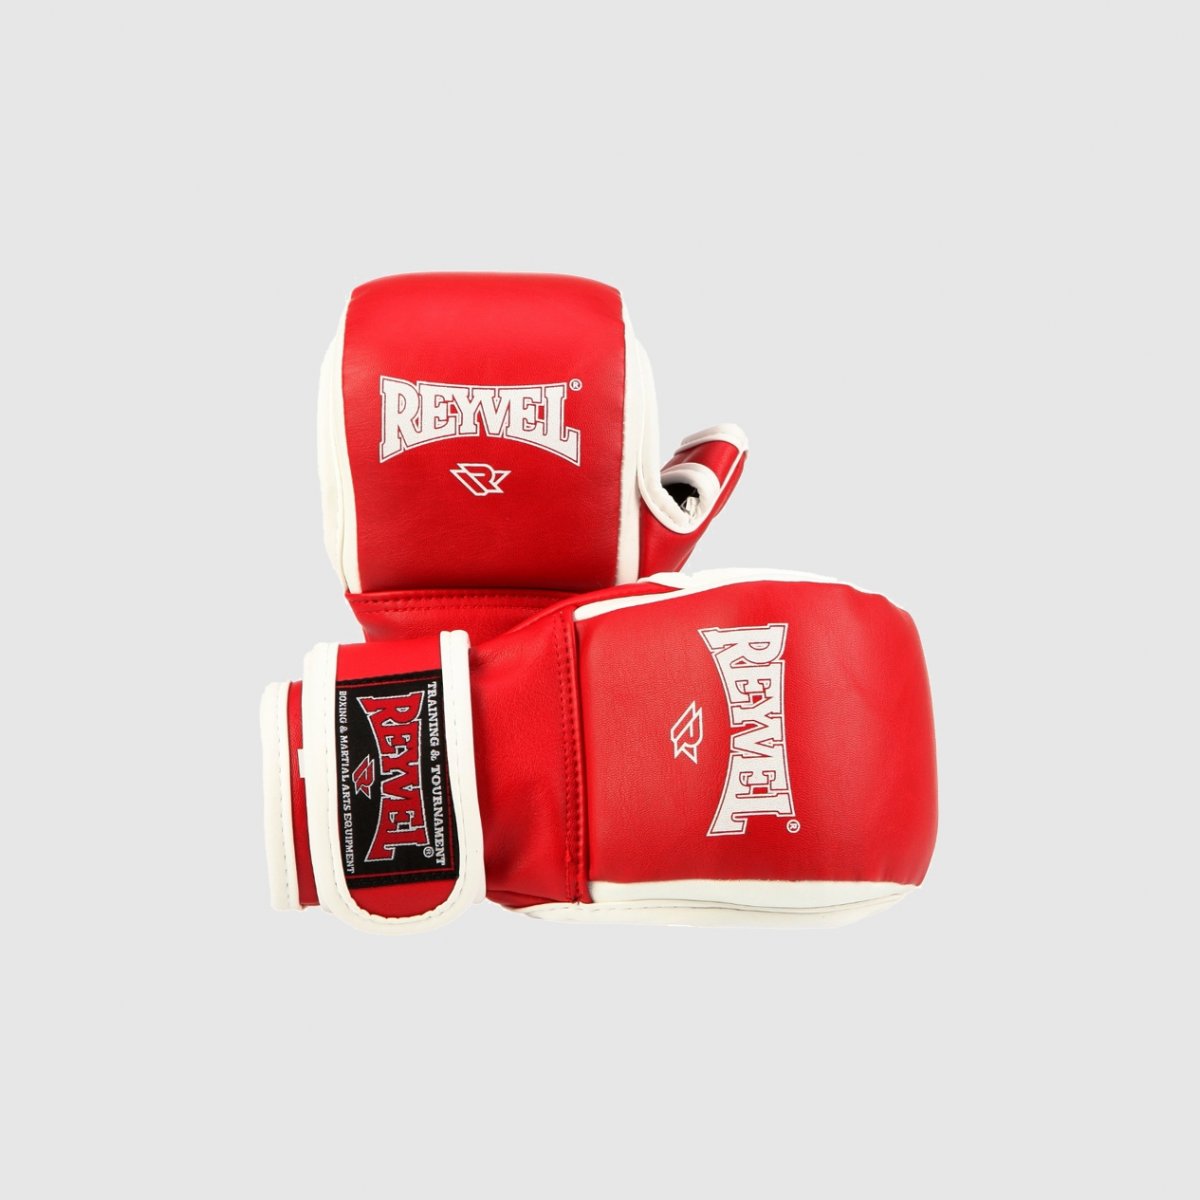 Боксерские перчатки Venum contender Black